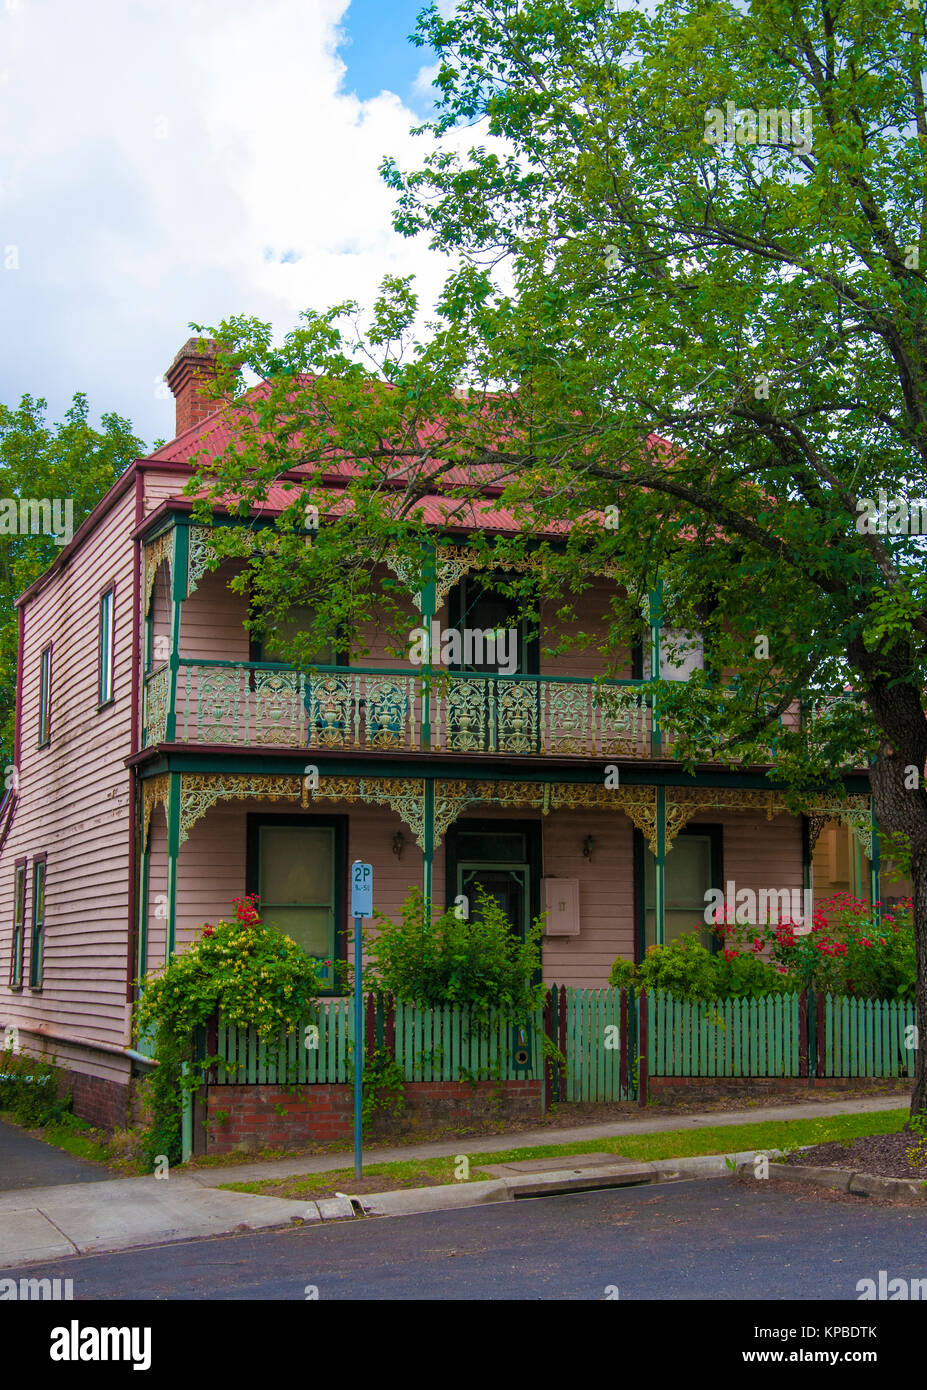 Victorian-era country home in Daylesford, a 19th century gold rush-era town in Victoria, Australia Stock Photo